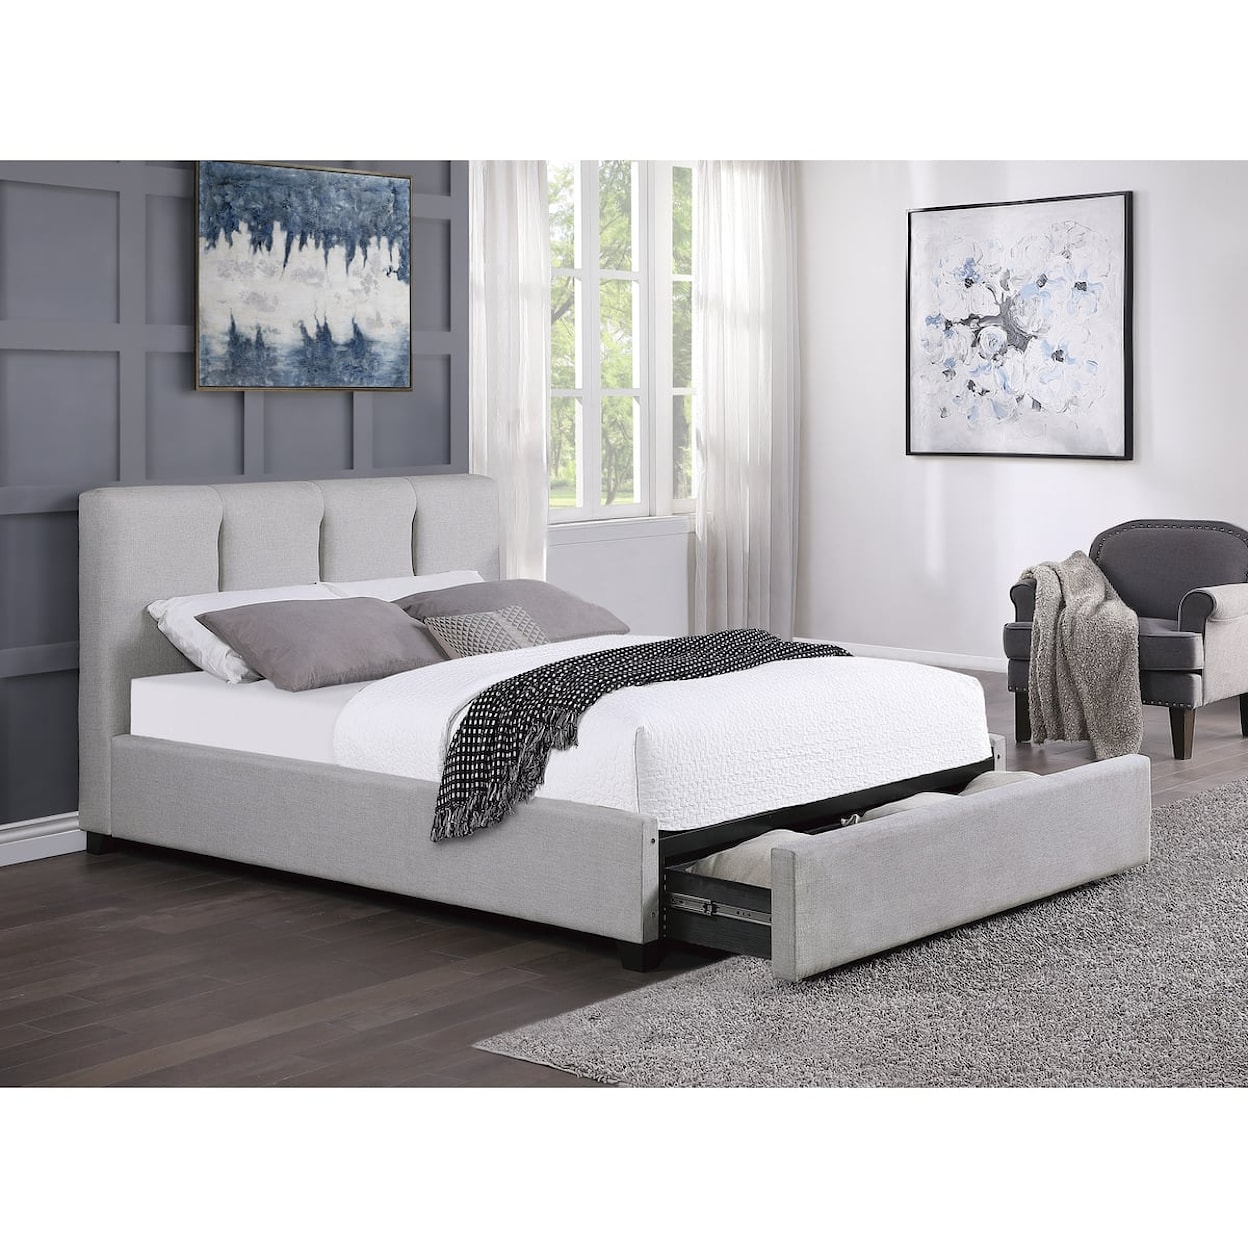 Homelegance Furniture Aitana King Bed with Footboard Storage